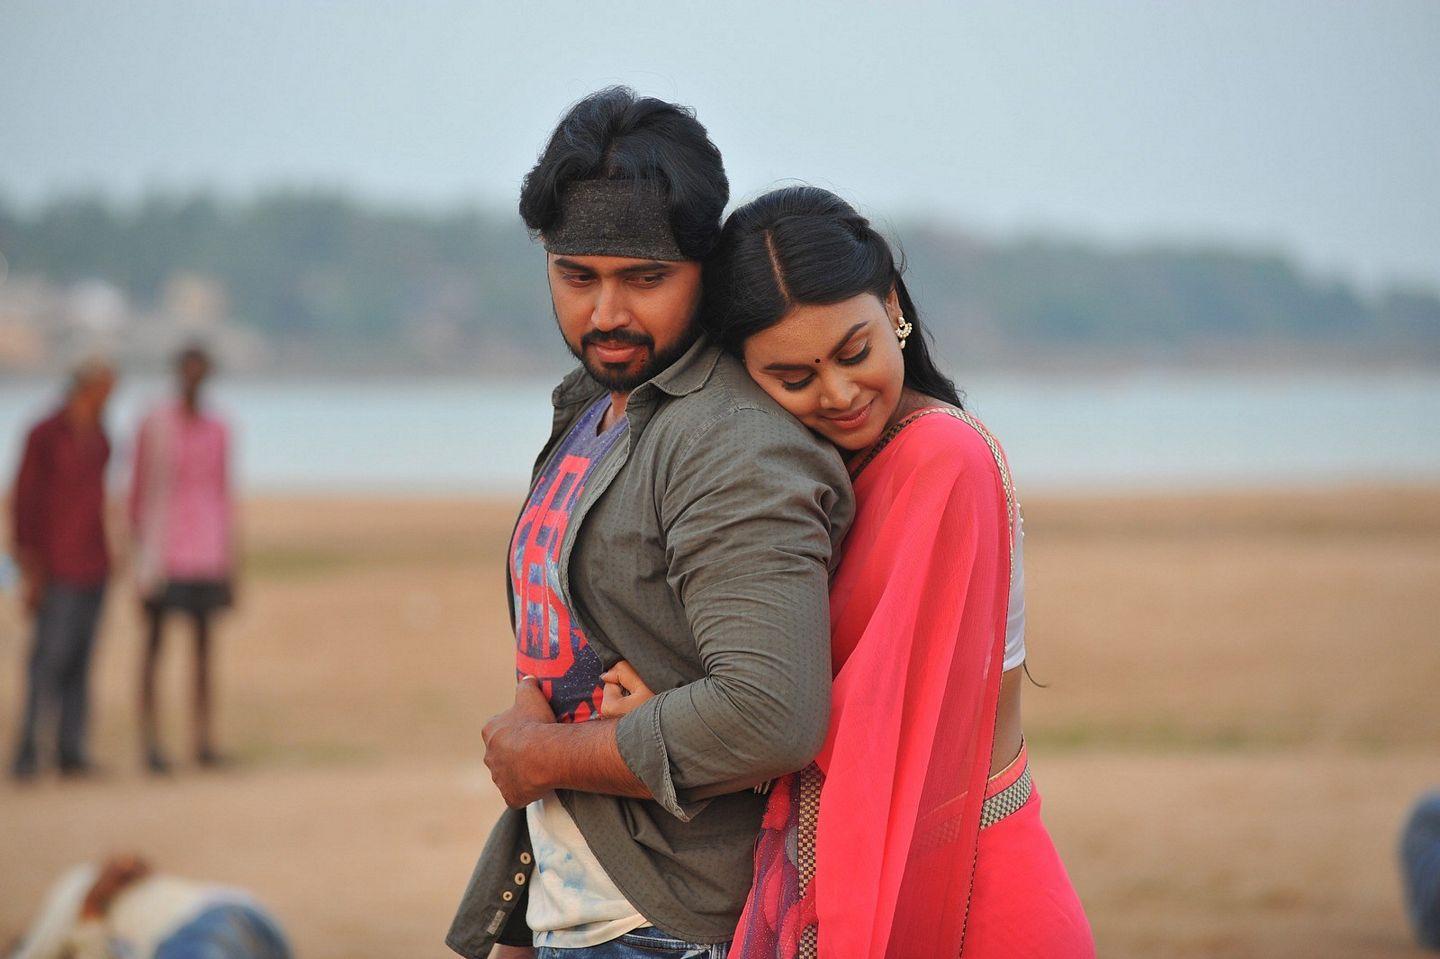 Sakalakala Vallabhudu Telugu Movie Latest Stills